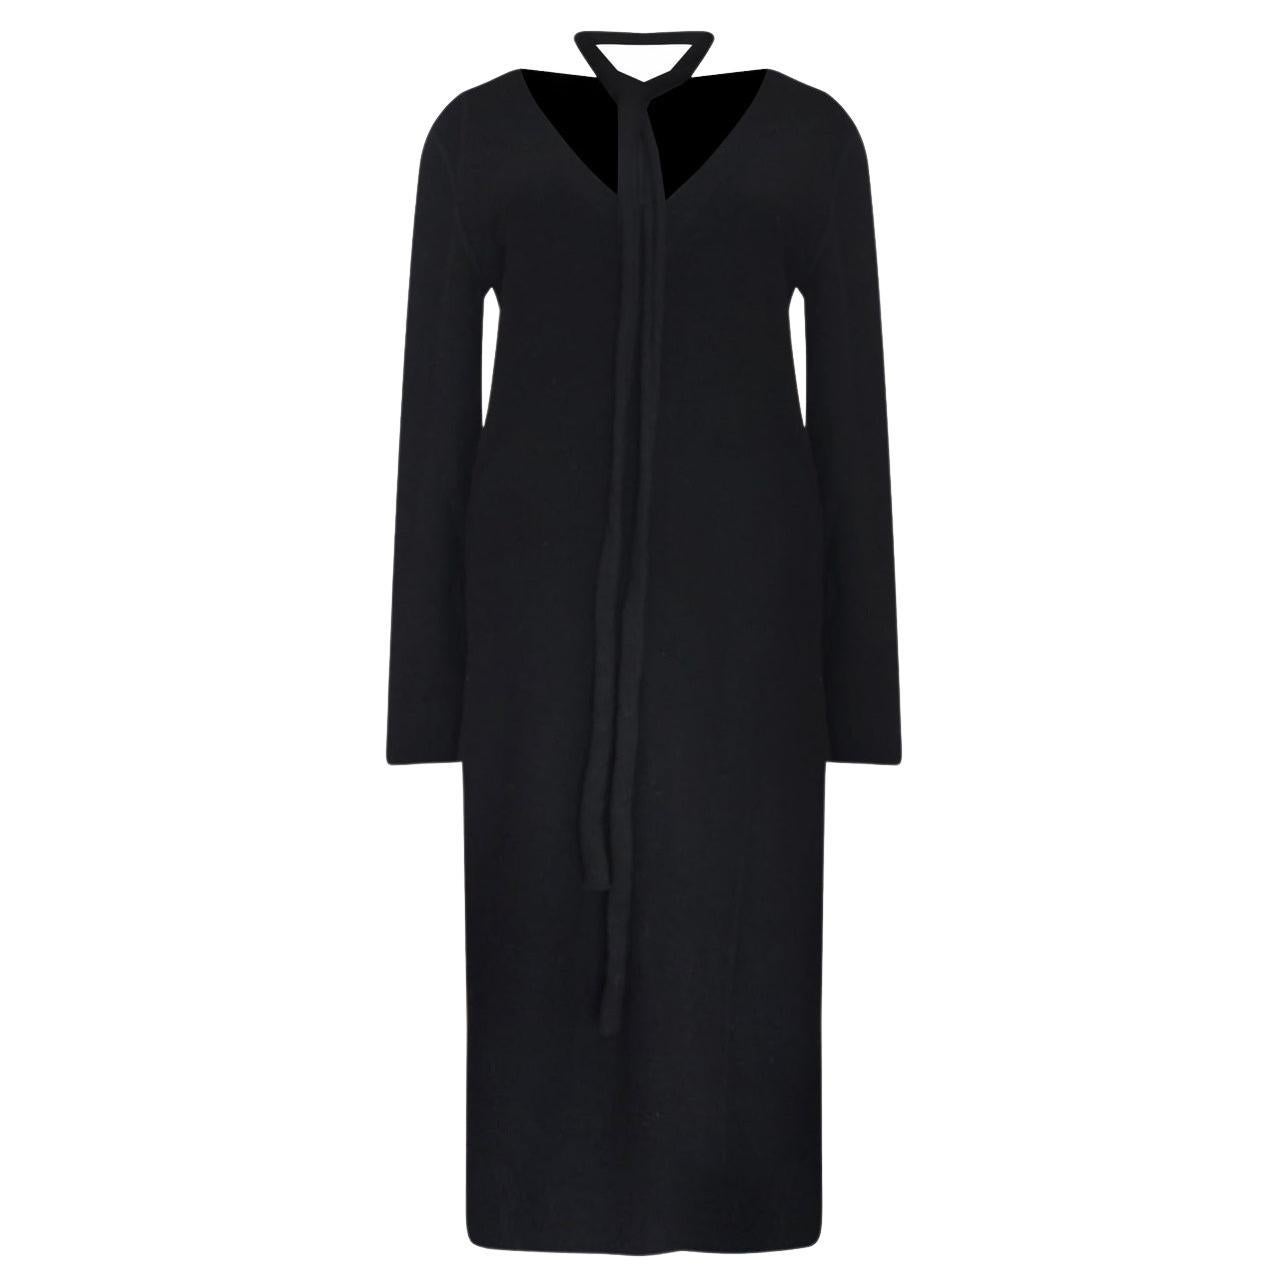 Chloé FALL 2015 RTW runway wool cashmere dress Clare Waight Keller READY-TO-WEAR For Sale